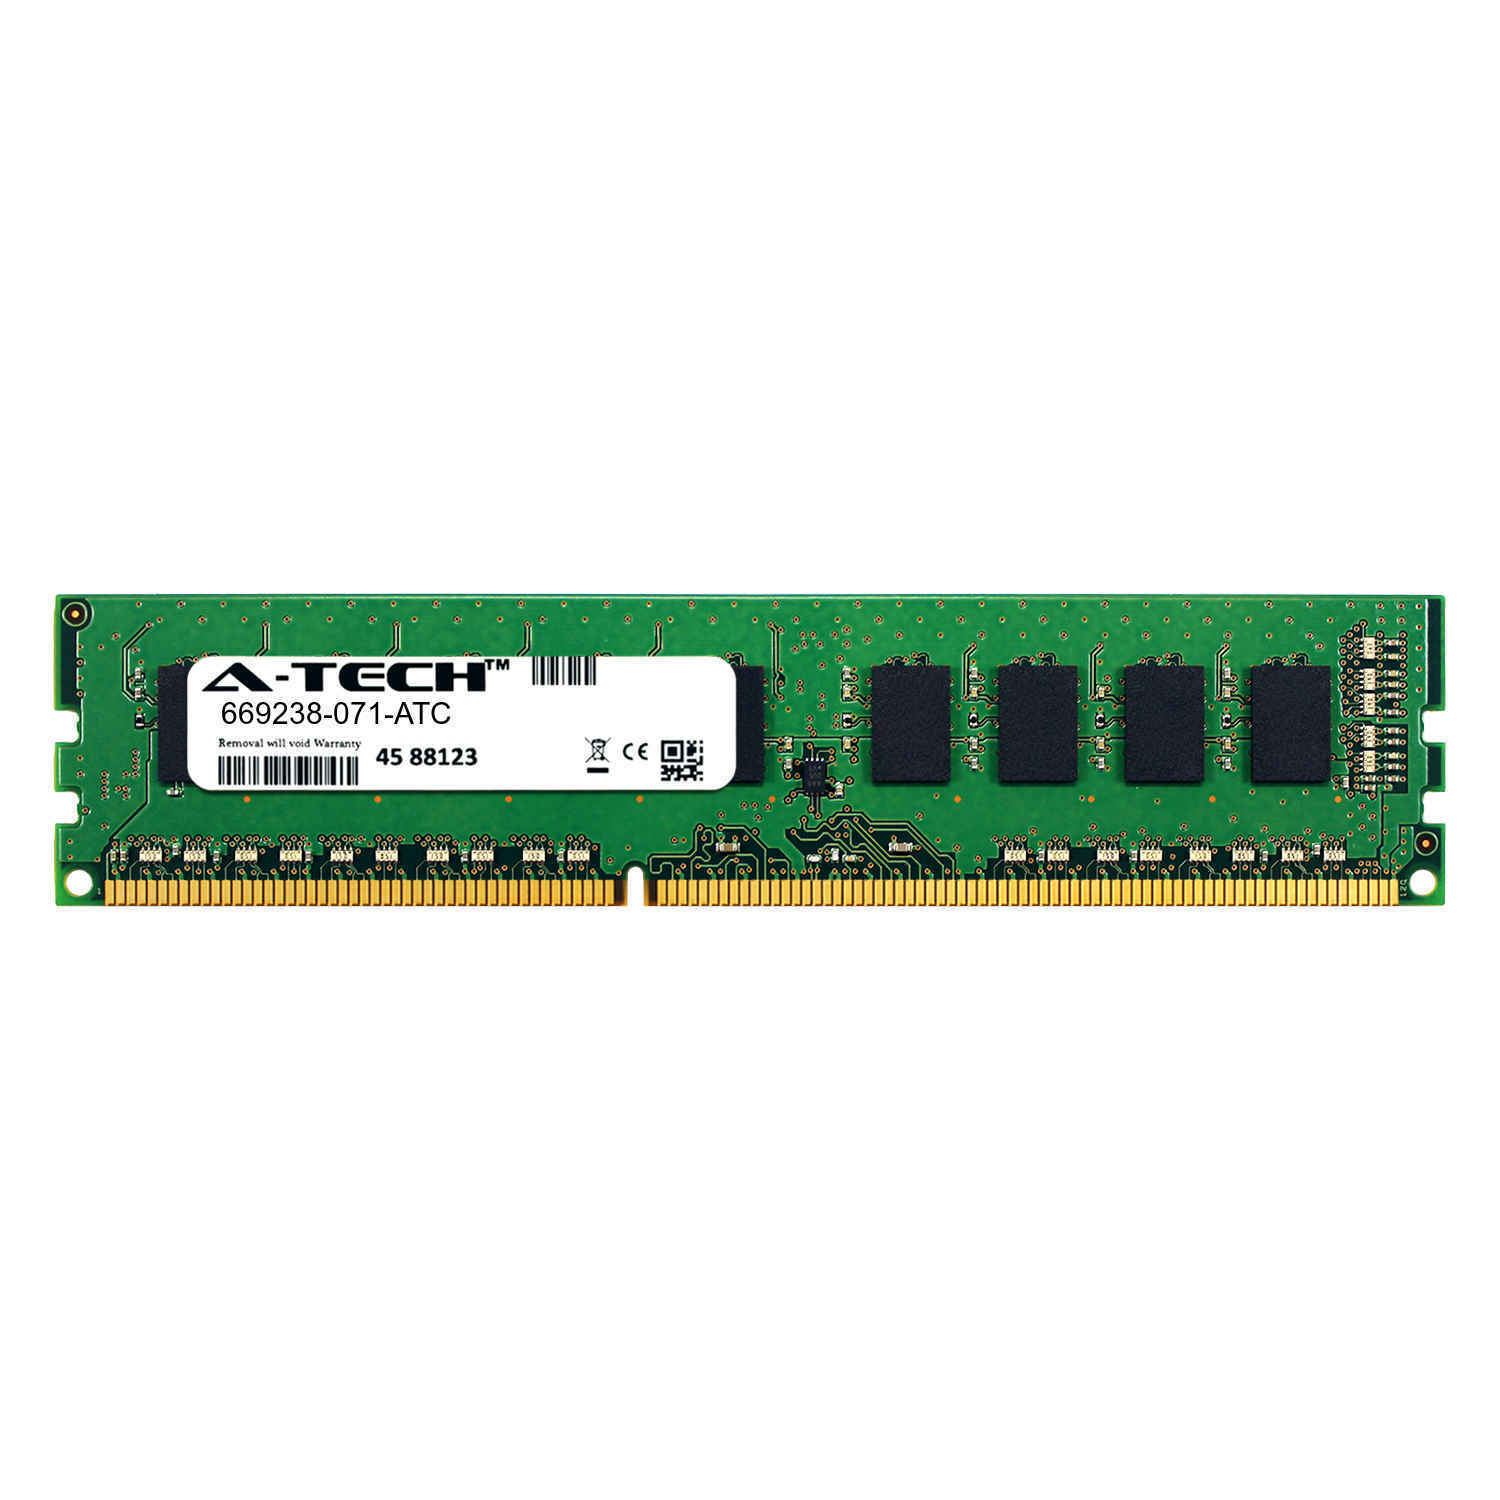 4GB DDR3 PC3-12800E ECC UDIMM (HP 669238-071 Equivalent) Server Memory RAM